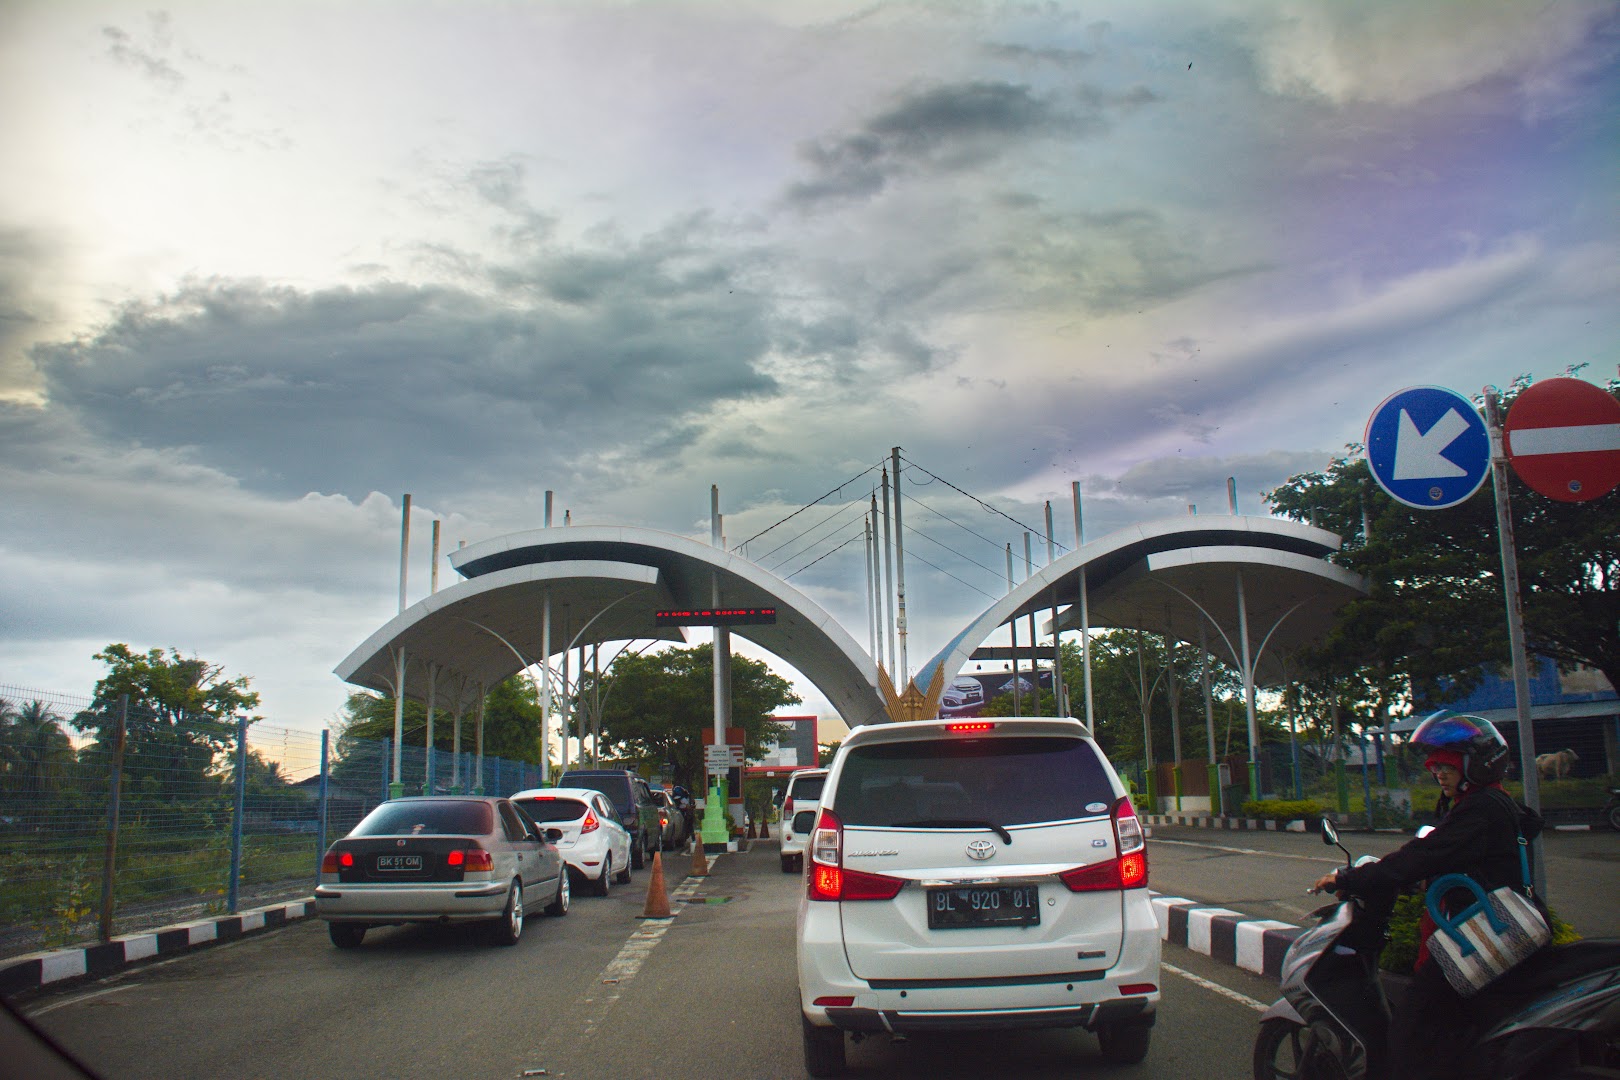 Gambar Main Entrance Sultan Iskandar Muda Airport